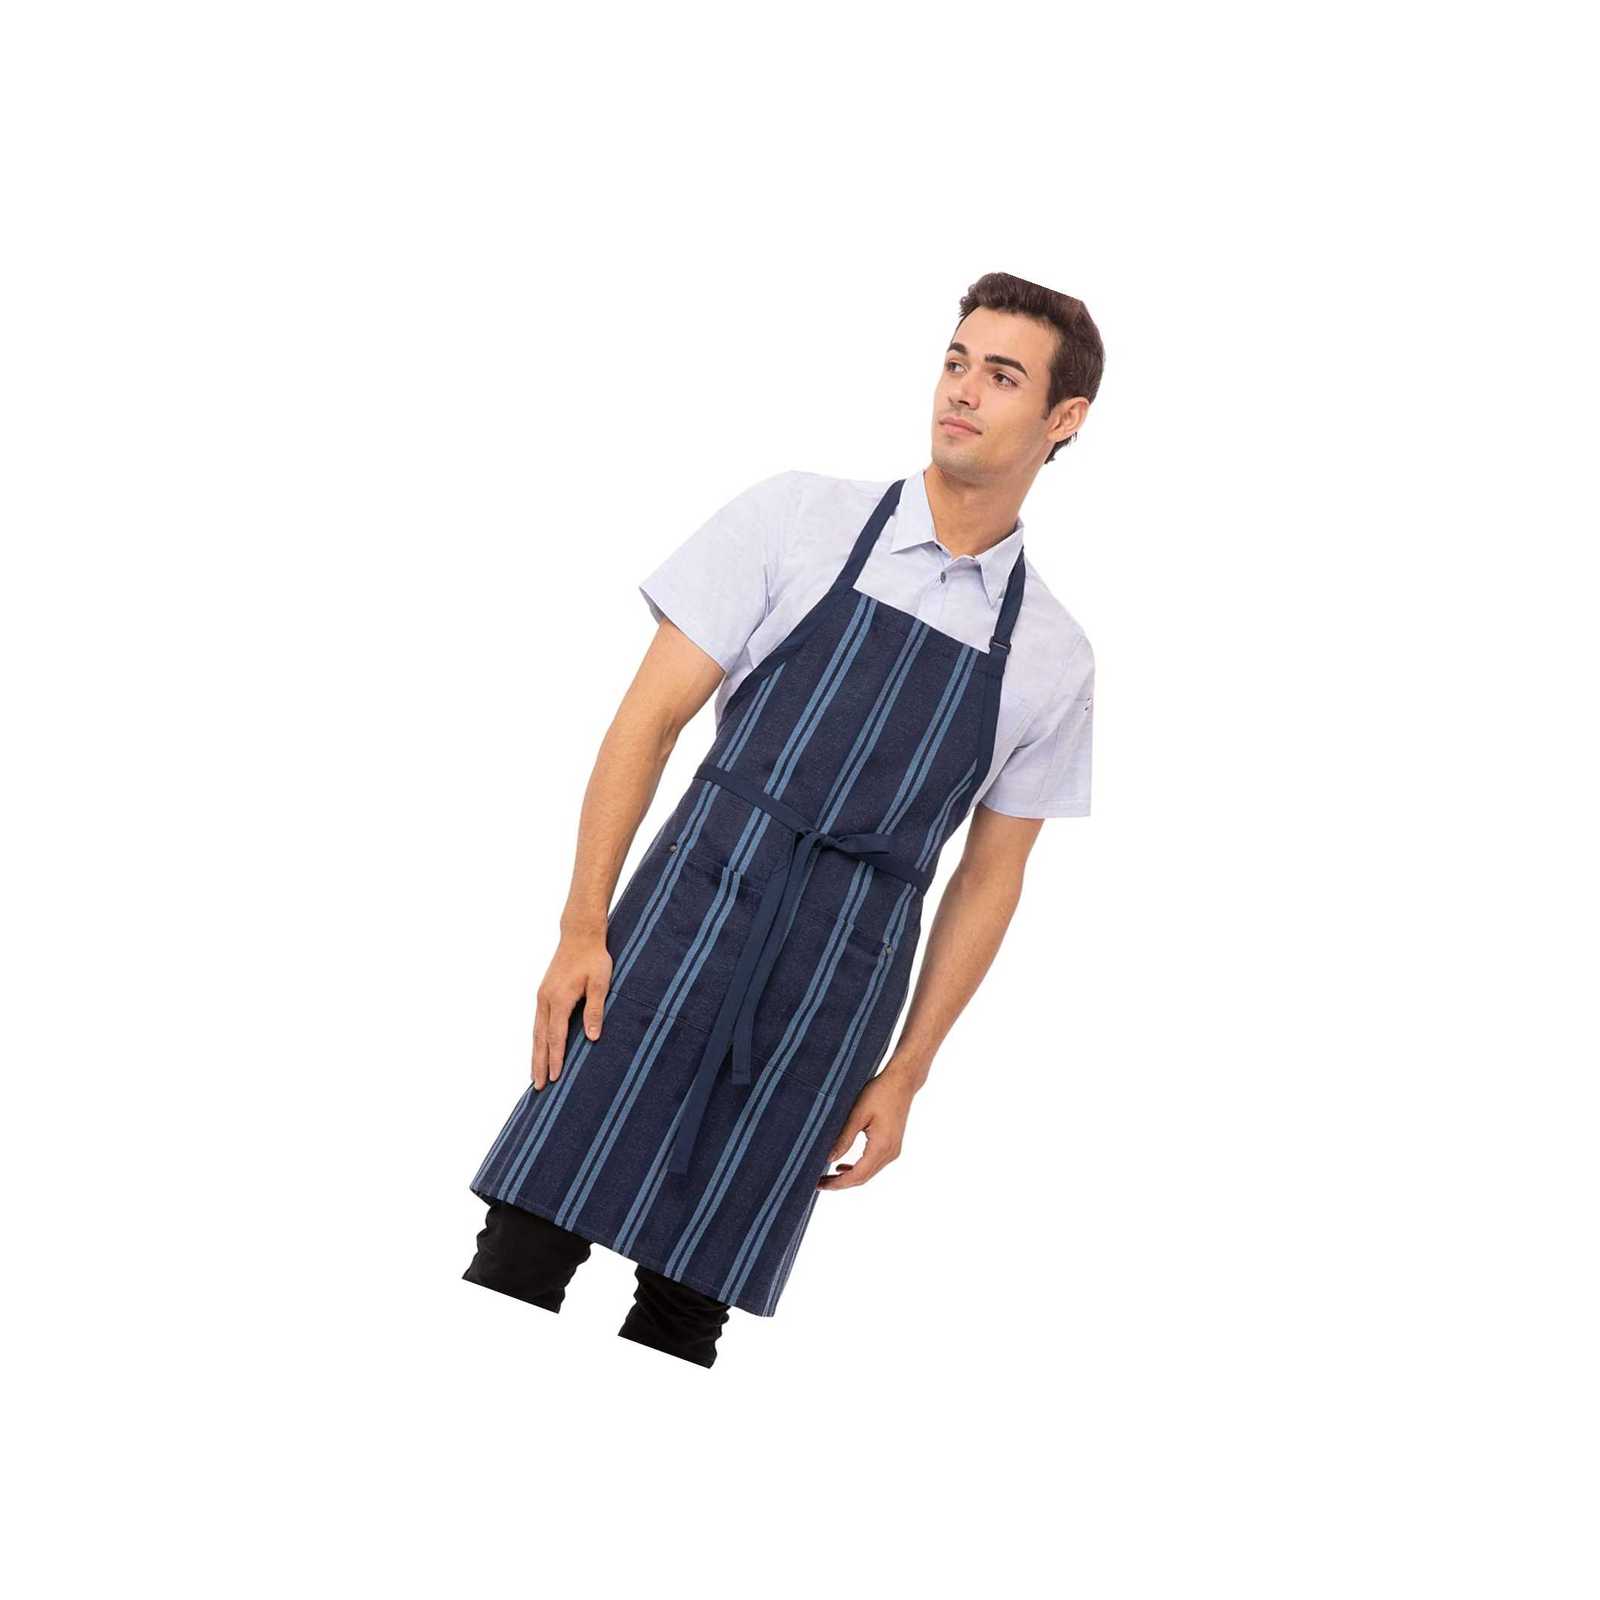 Mgrt Products - Uni presdio bib apron, navy/blue, one size